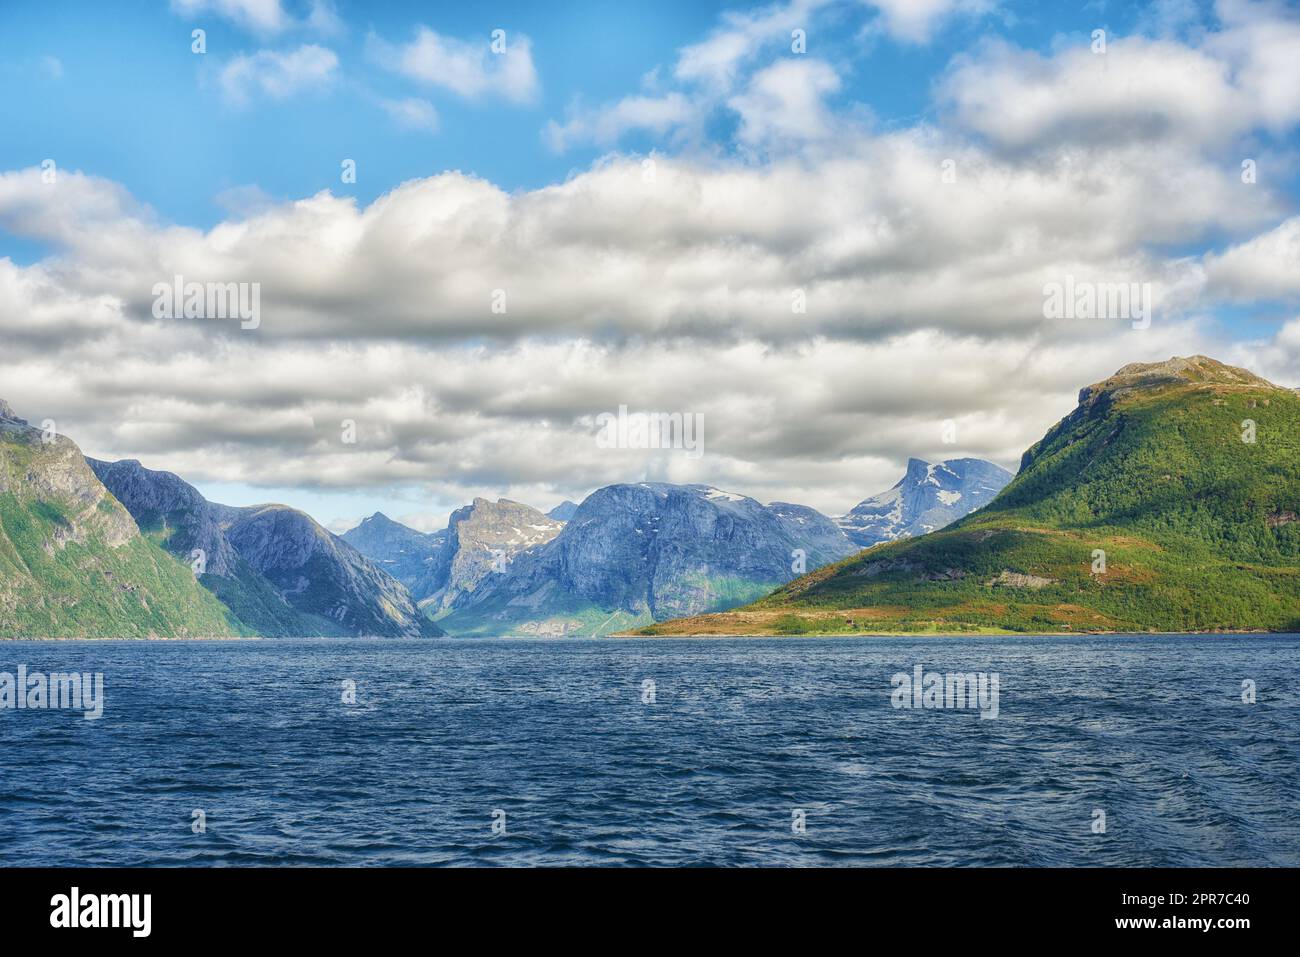 Berglandschaft nördlich des Polarkreises in Bodo, Norwegen. Malerischer Blick auf grüne Hügel, umgeben vom Meer in abgelegener Gegend mit Wolken. Auslandsreisen, Auslandsreisen für Urlaub und Urlaub Stockfoto